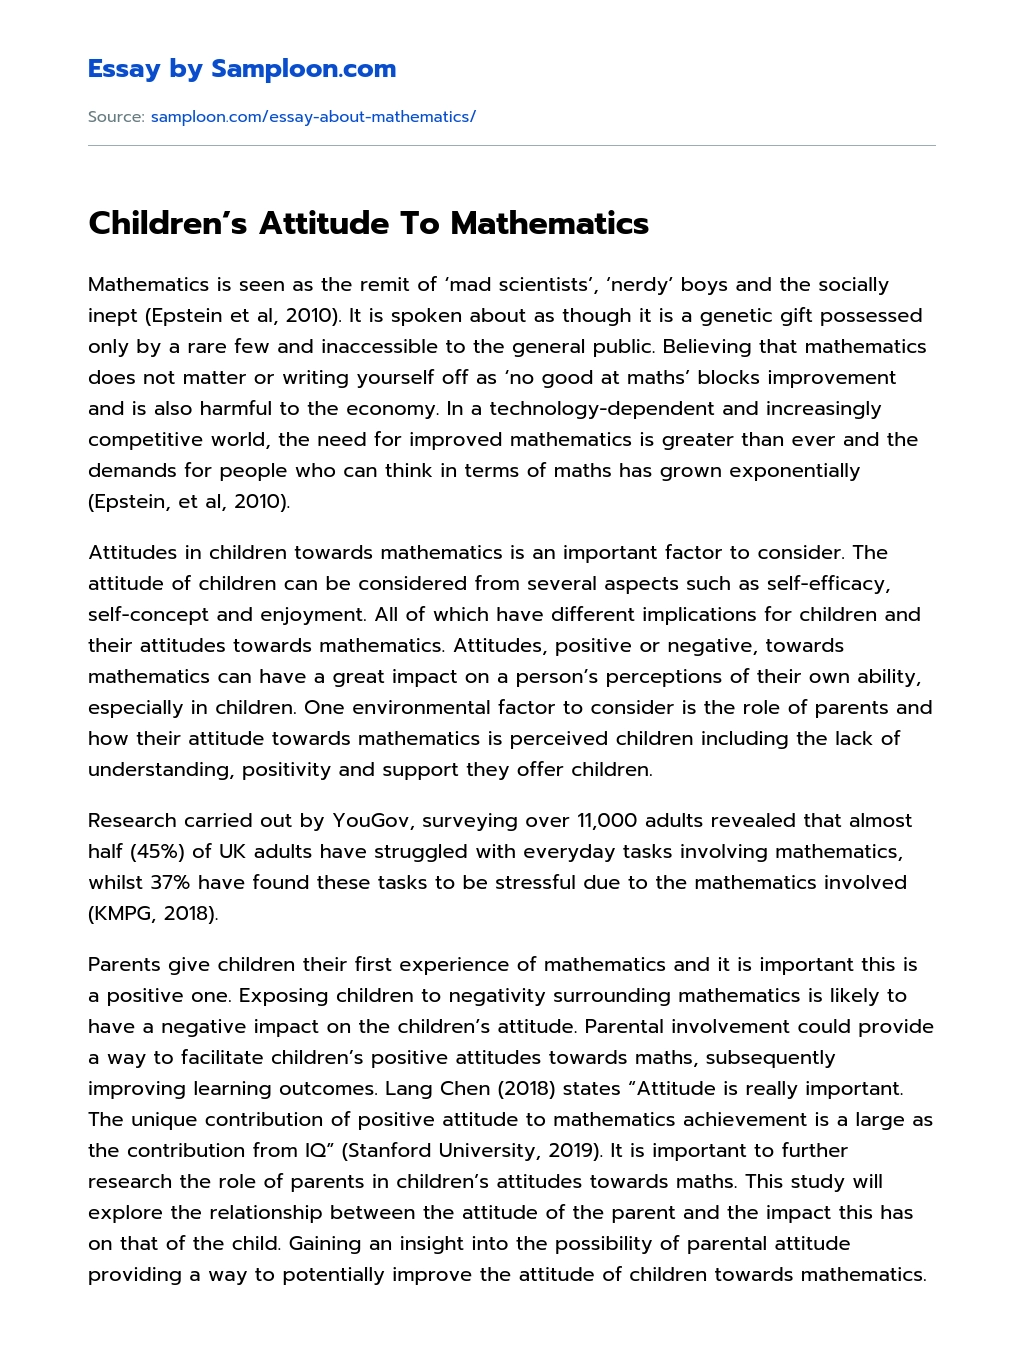 Сhildren’s Attitude To Mathematics essay